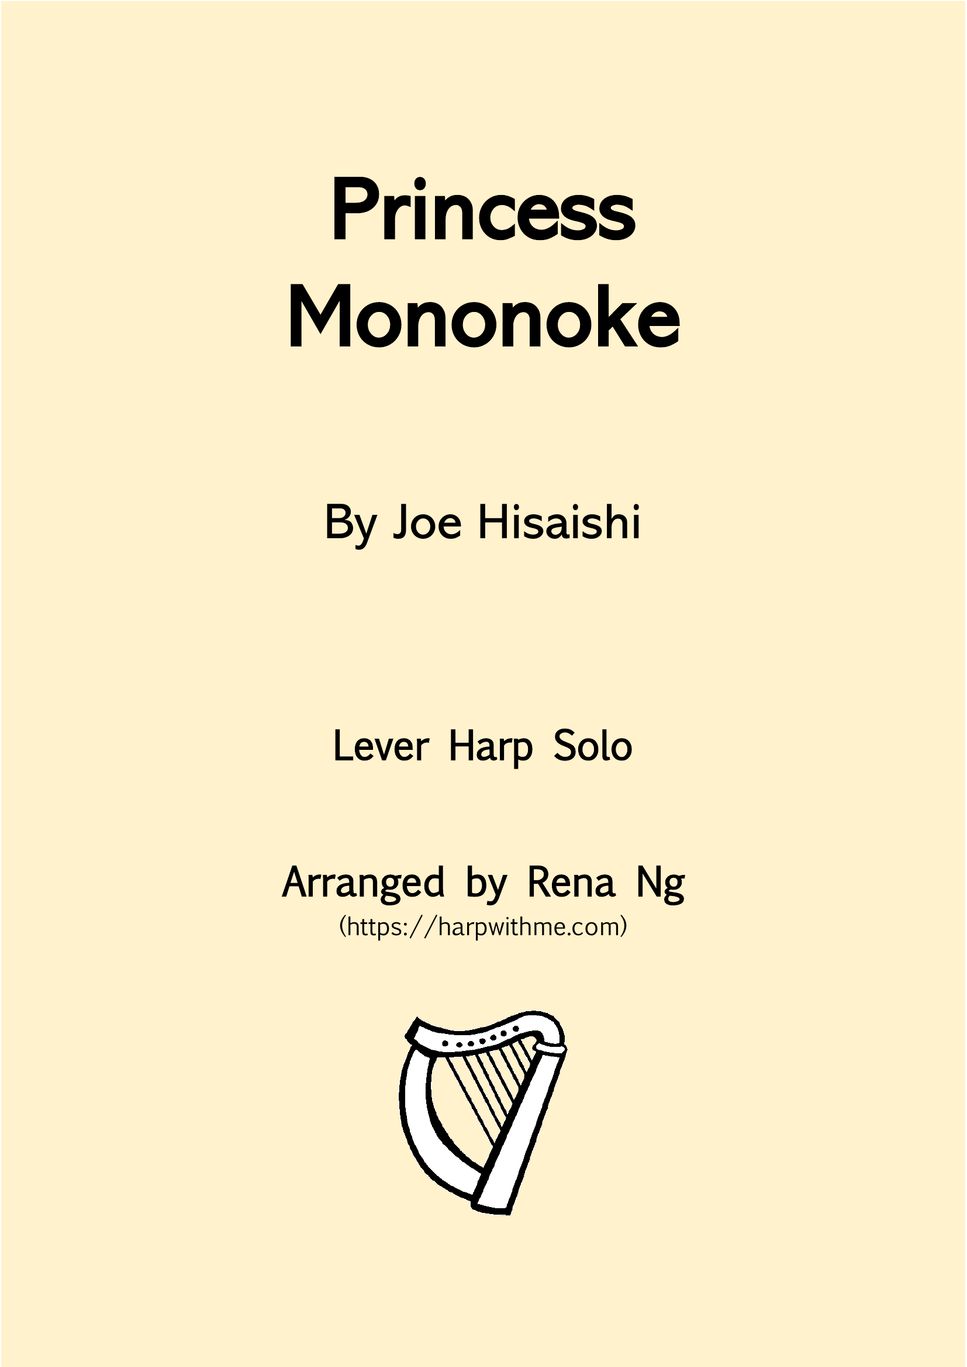 Joe Hisaishi - Princess Mononoke Theme (Lever Harp Solo) by Harp With Me